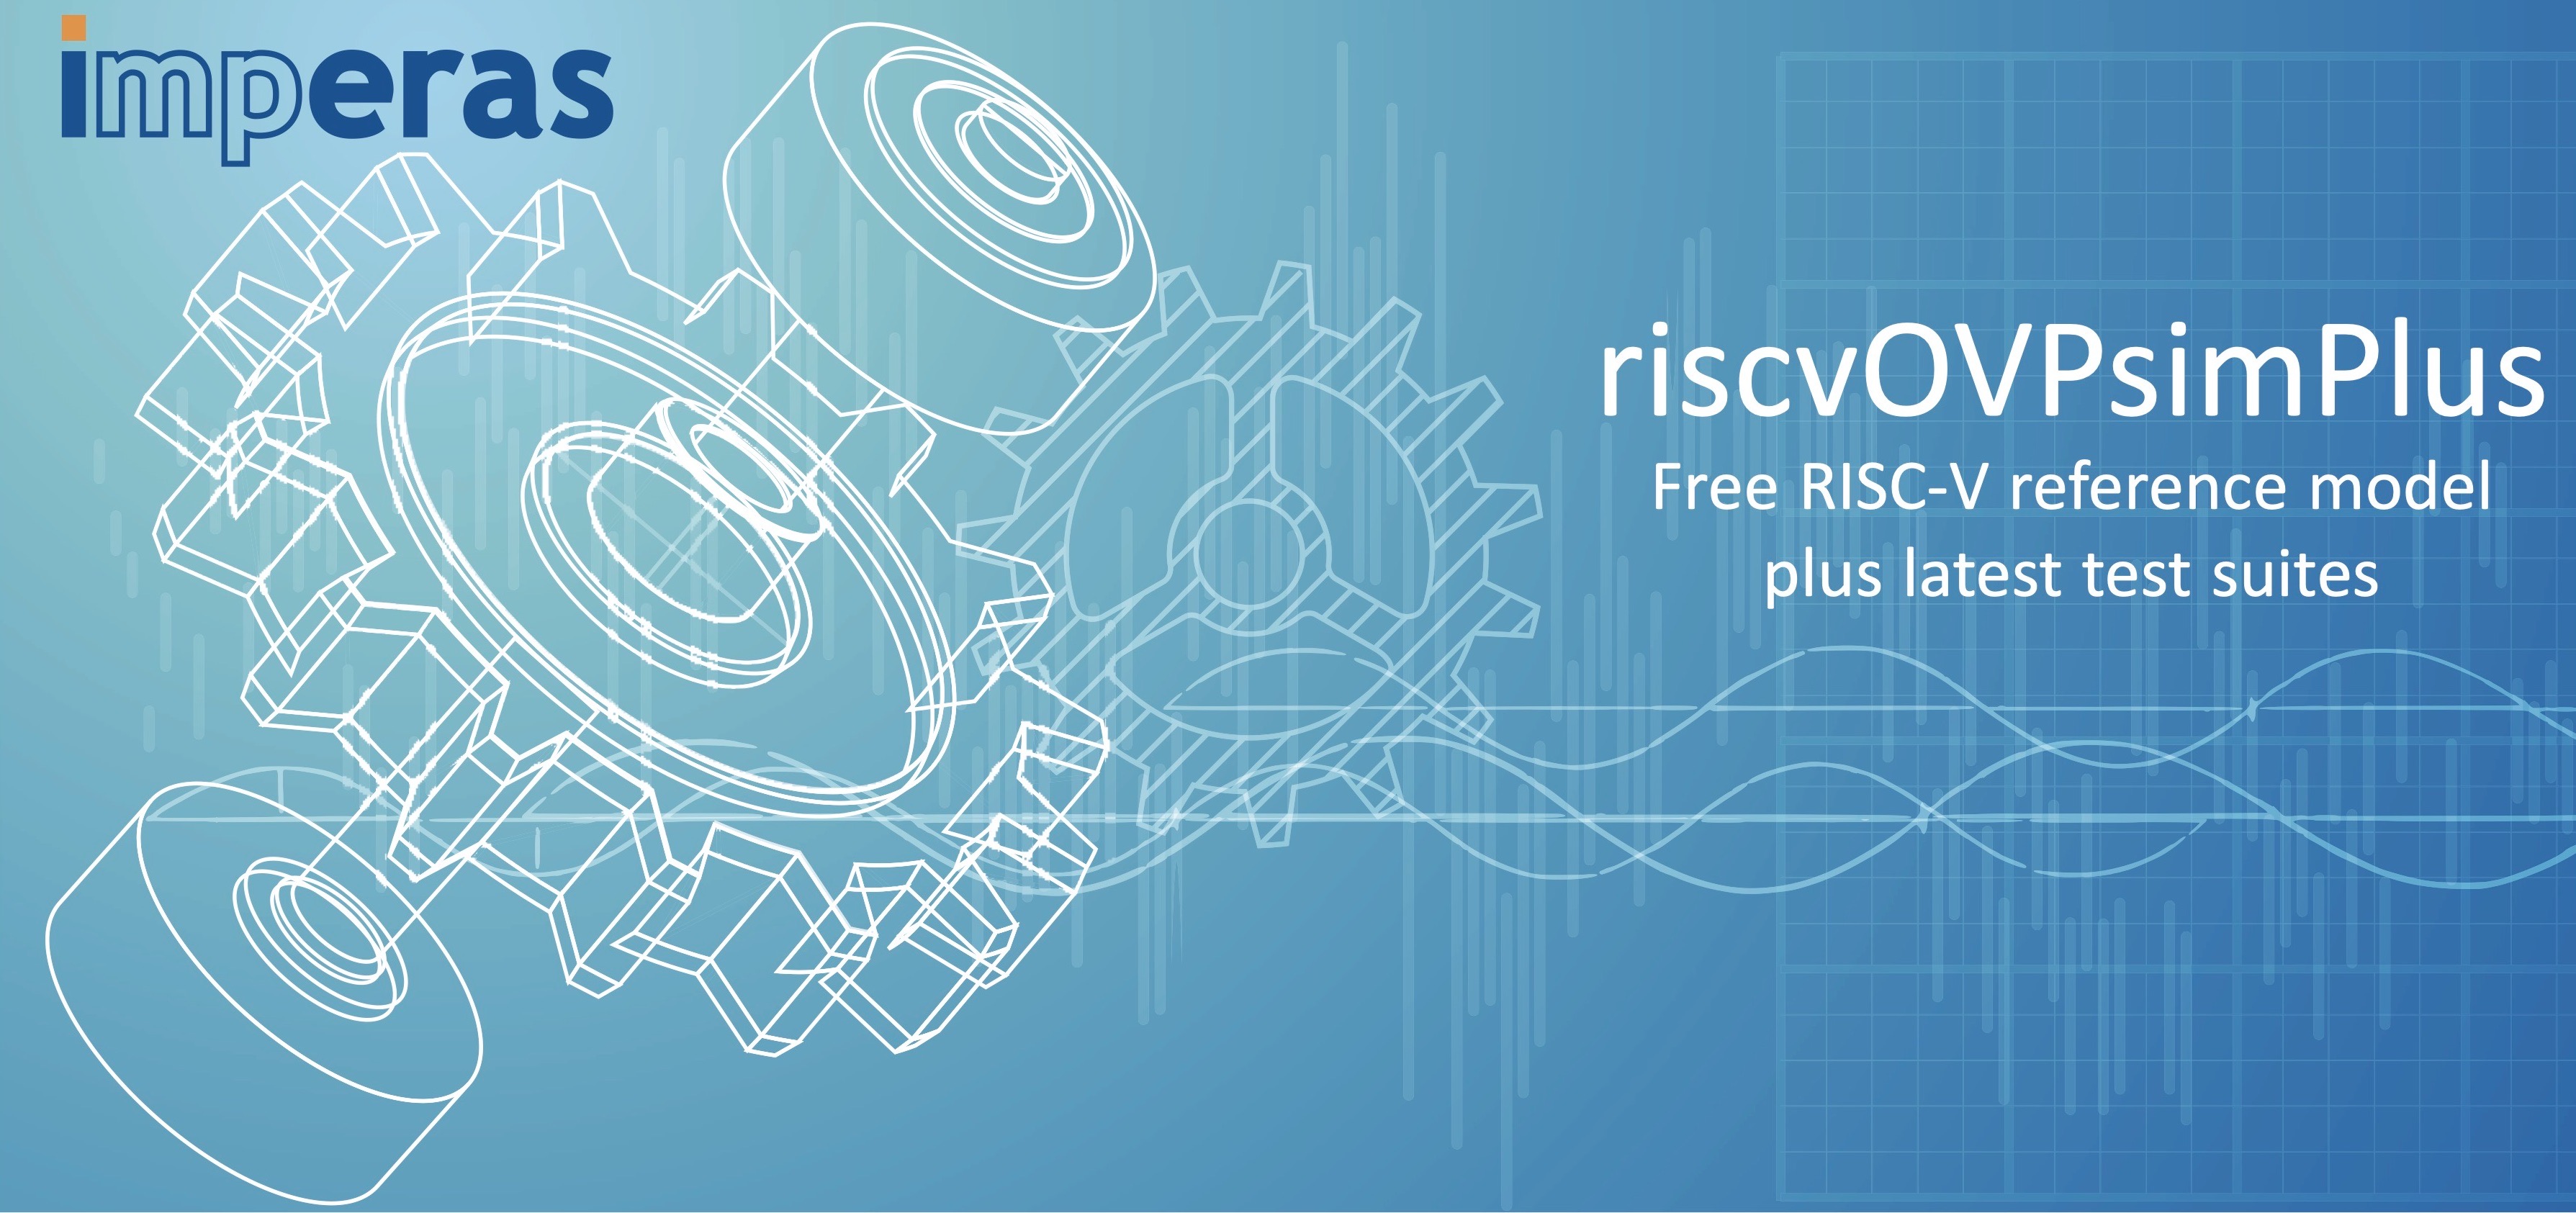 Imperas riscvOVPsimPlus Free RISC-V Reference model plus latest test suites